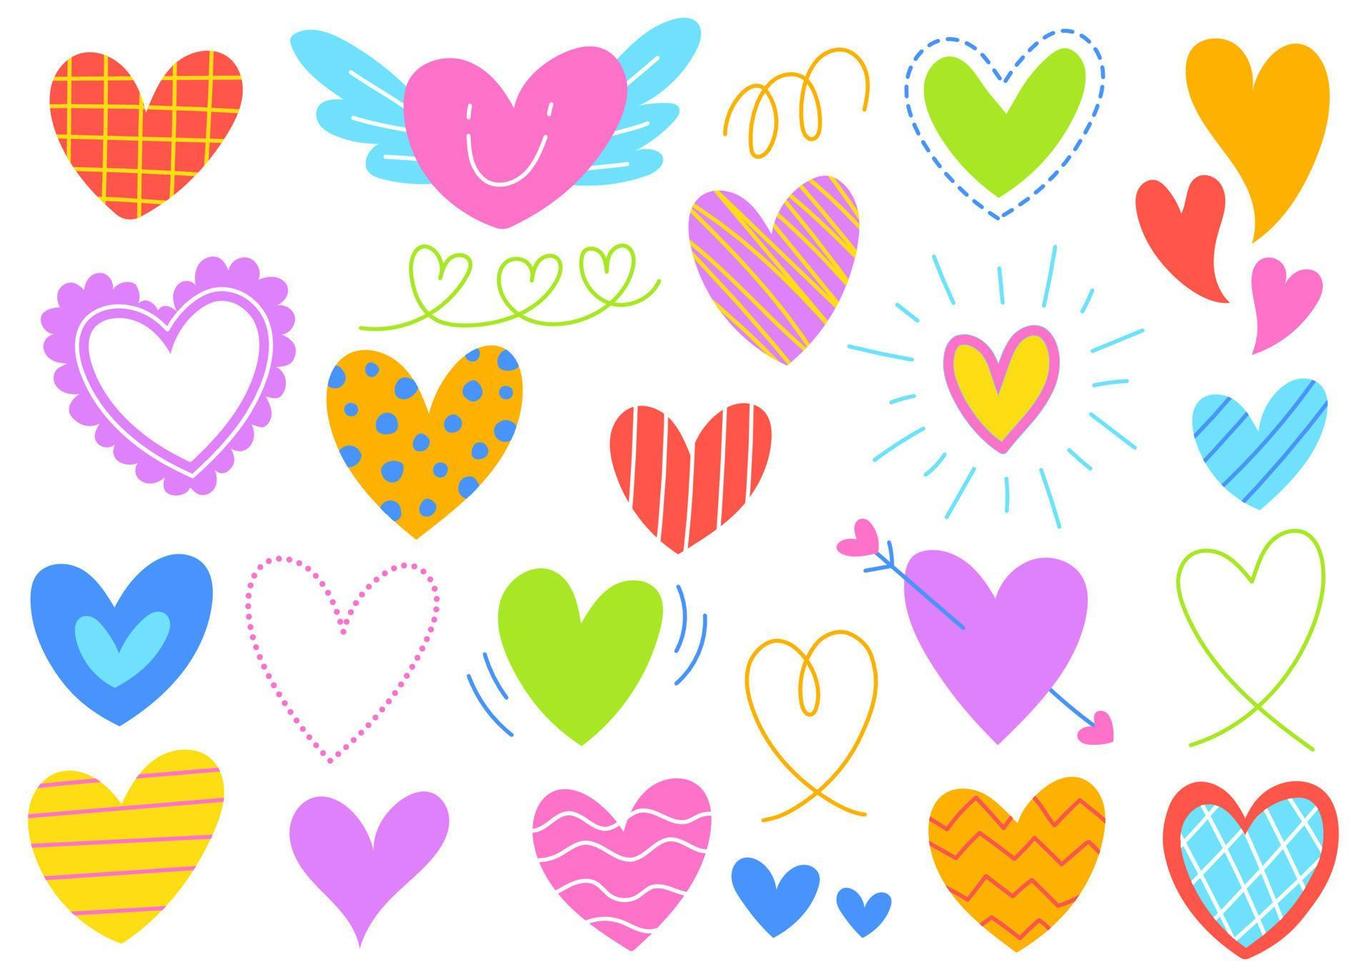 Cute Heart Element Decoration Valentine's Day Love Romantic Color Colorful Rainbow Line Form Doodle Cartoon Hand Drawing Sketch Vector Illustration Pack Set Bundle Collection